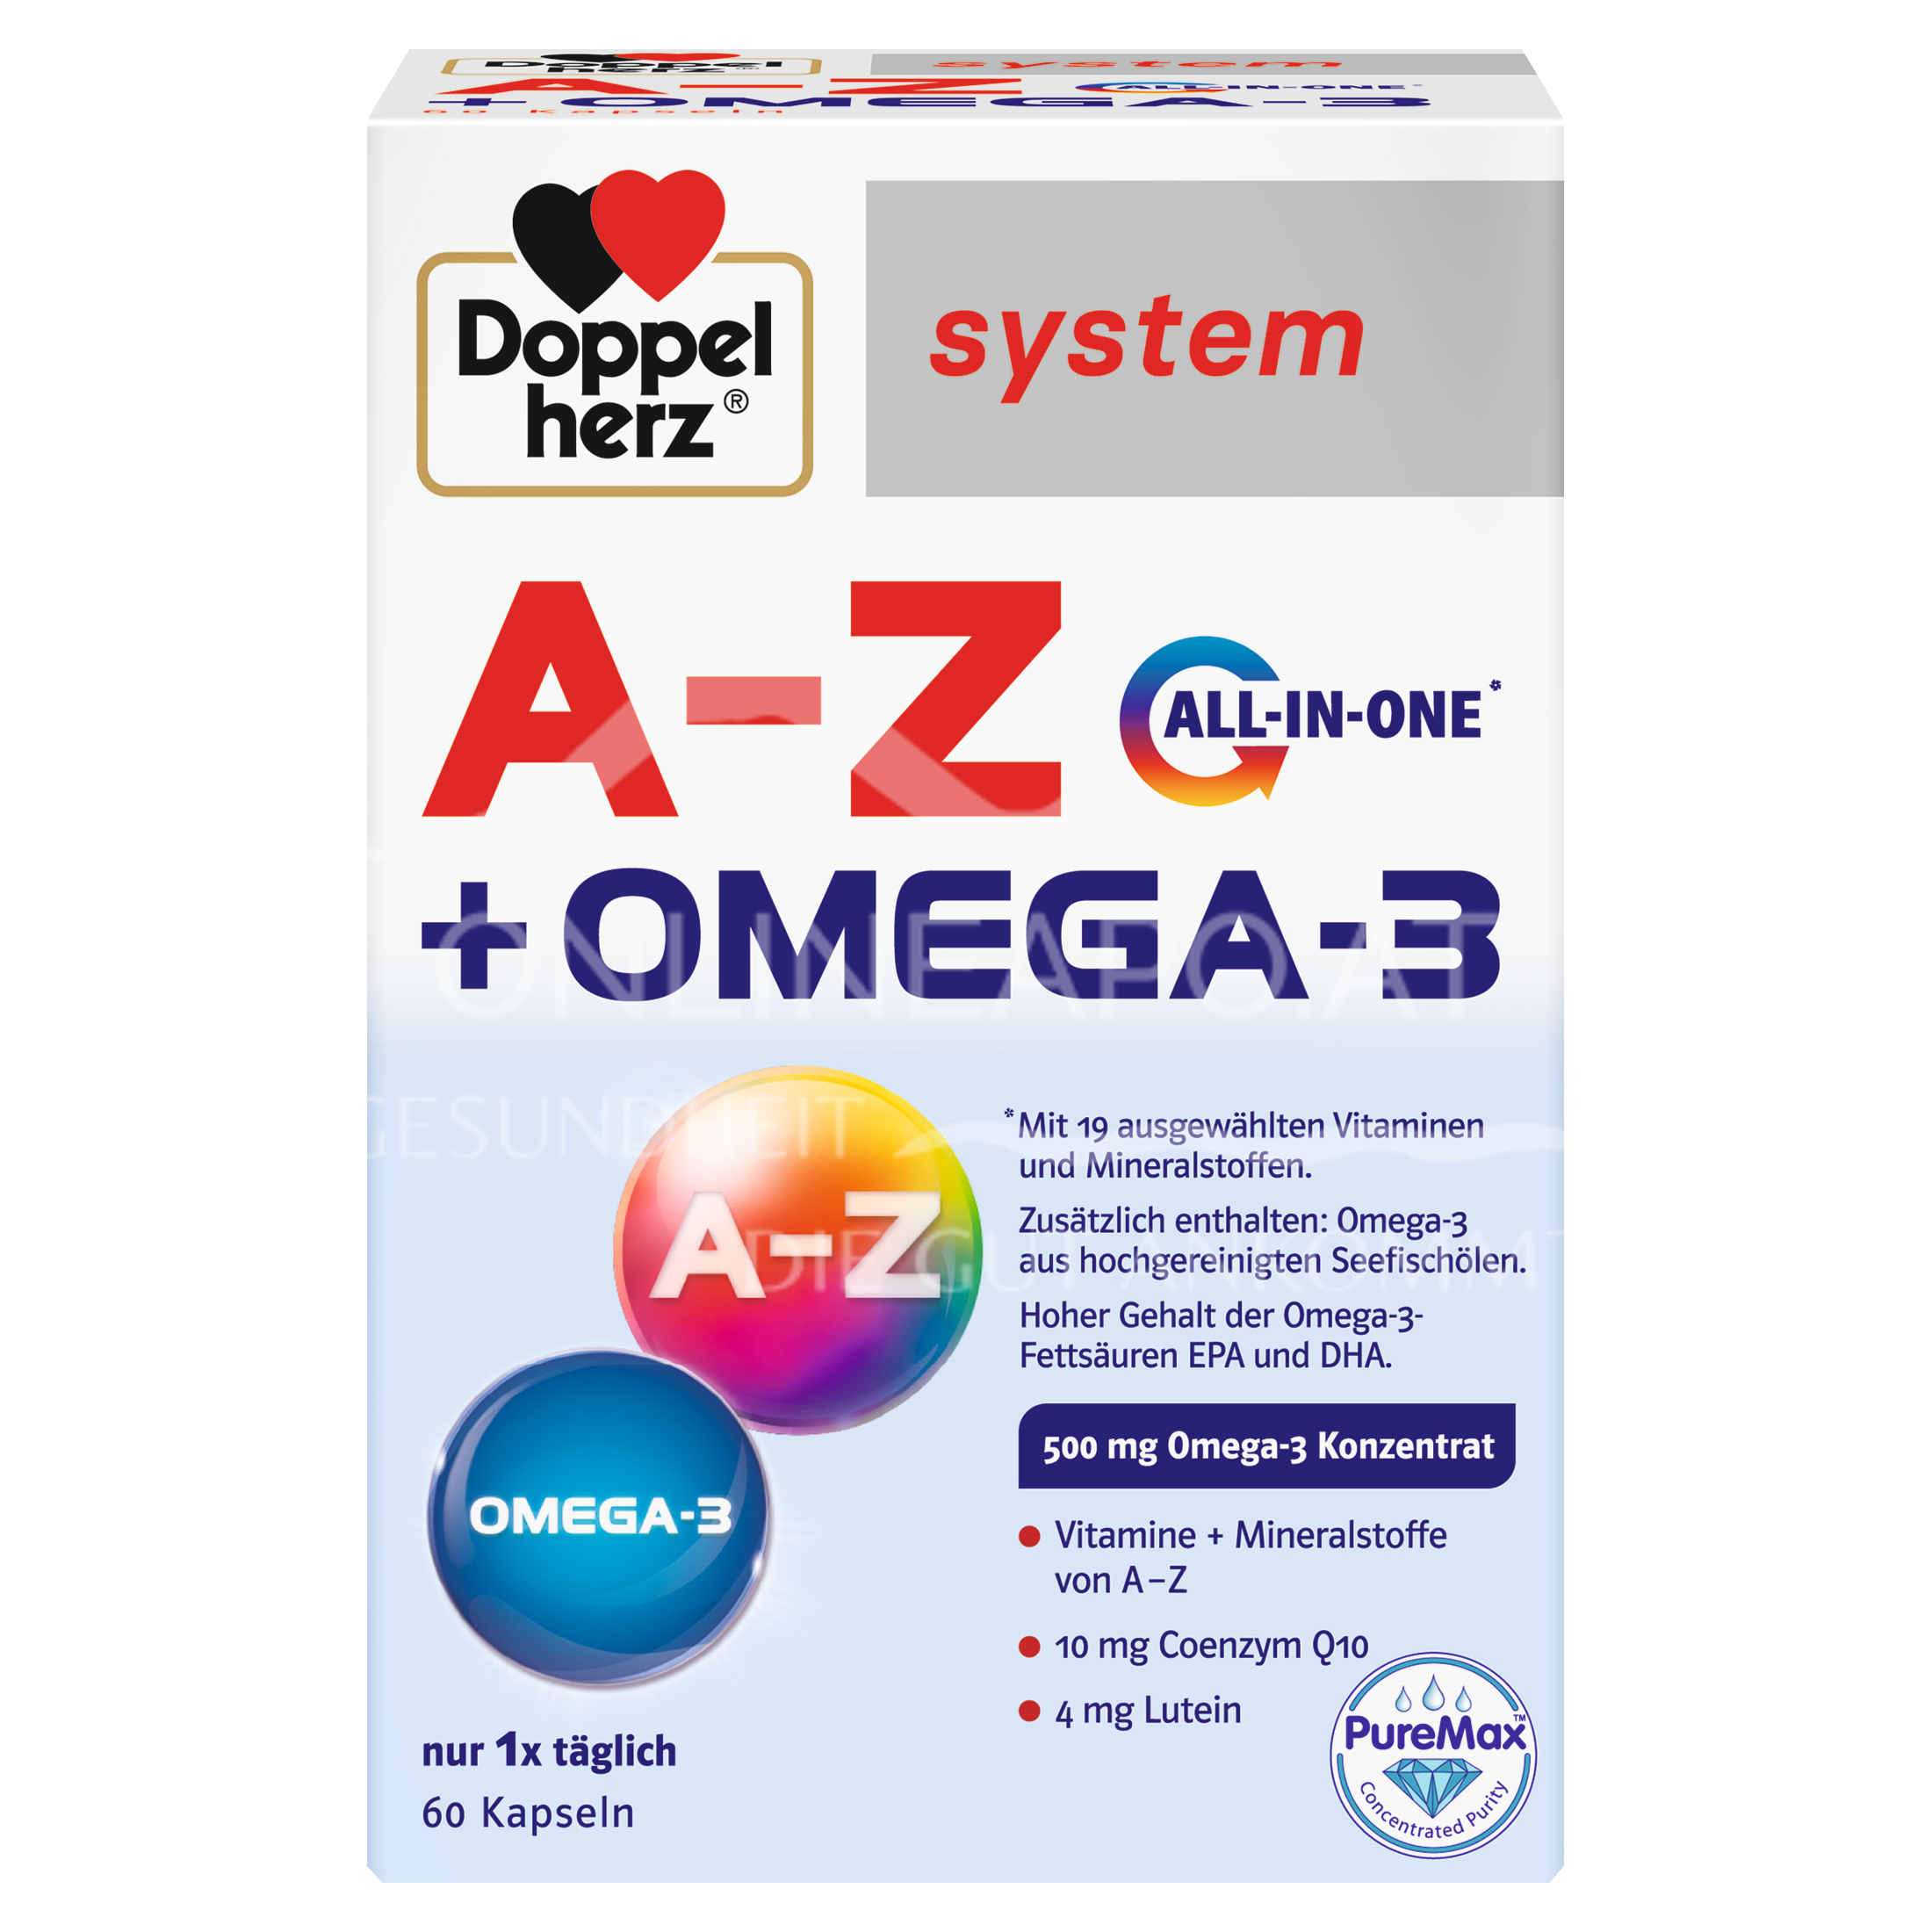 Doppelherz system A-Z + OMEGA-3 ALL-IN-ONE* Kapseln